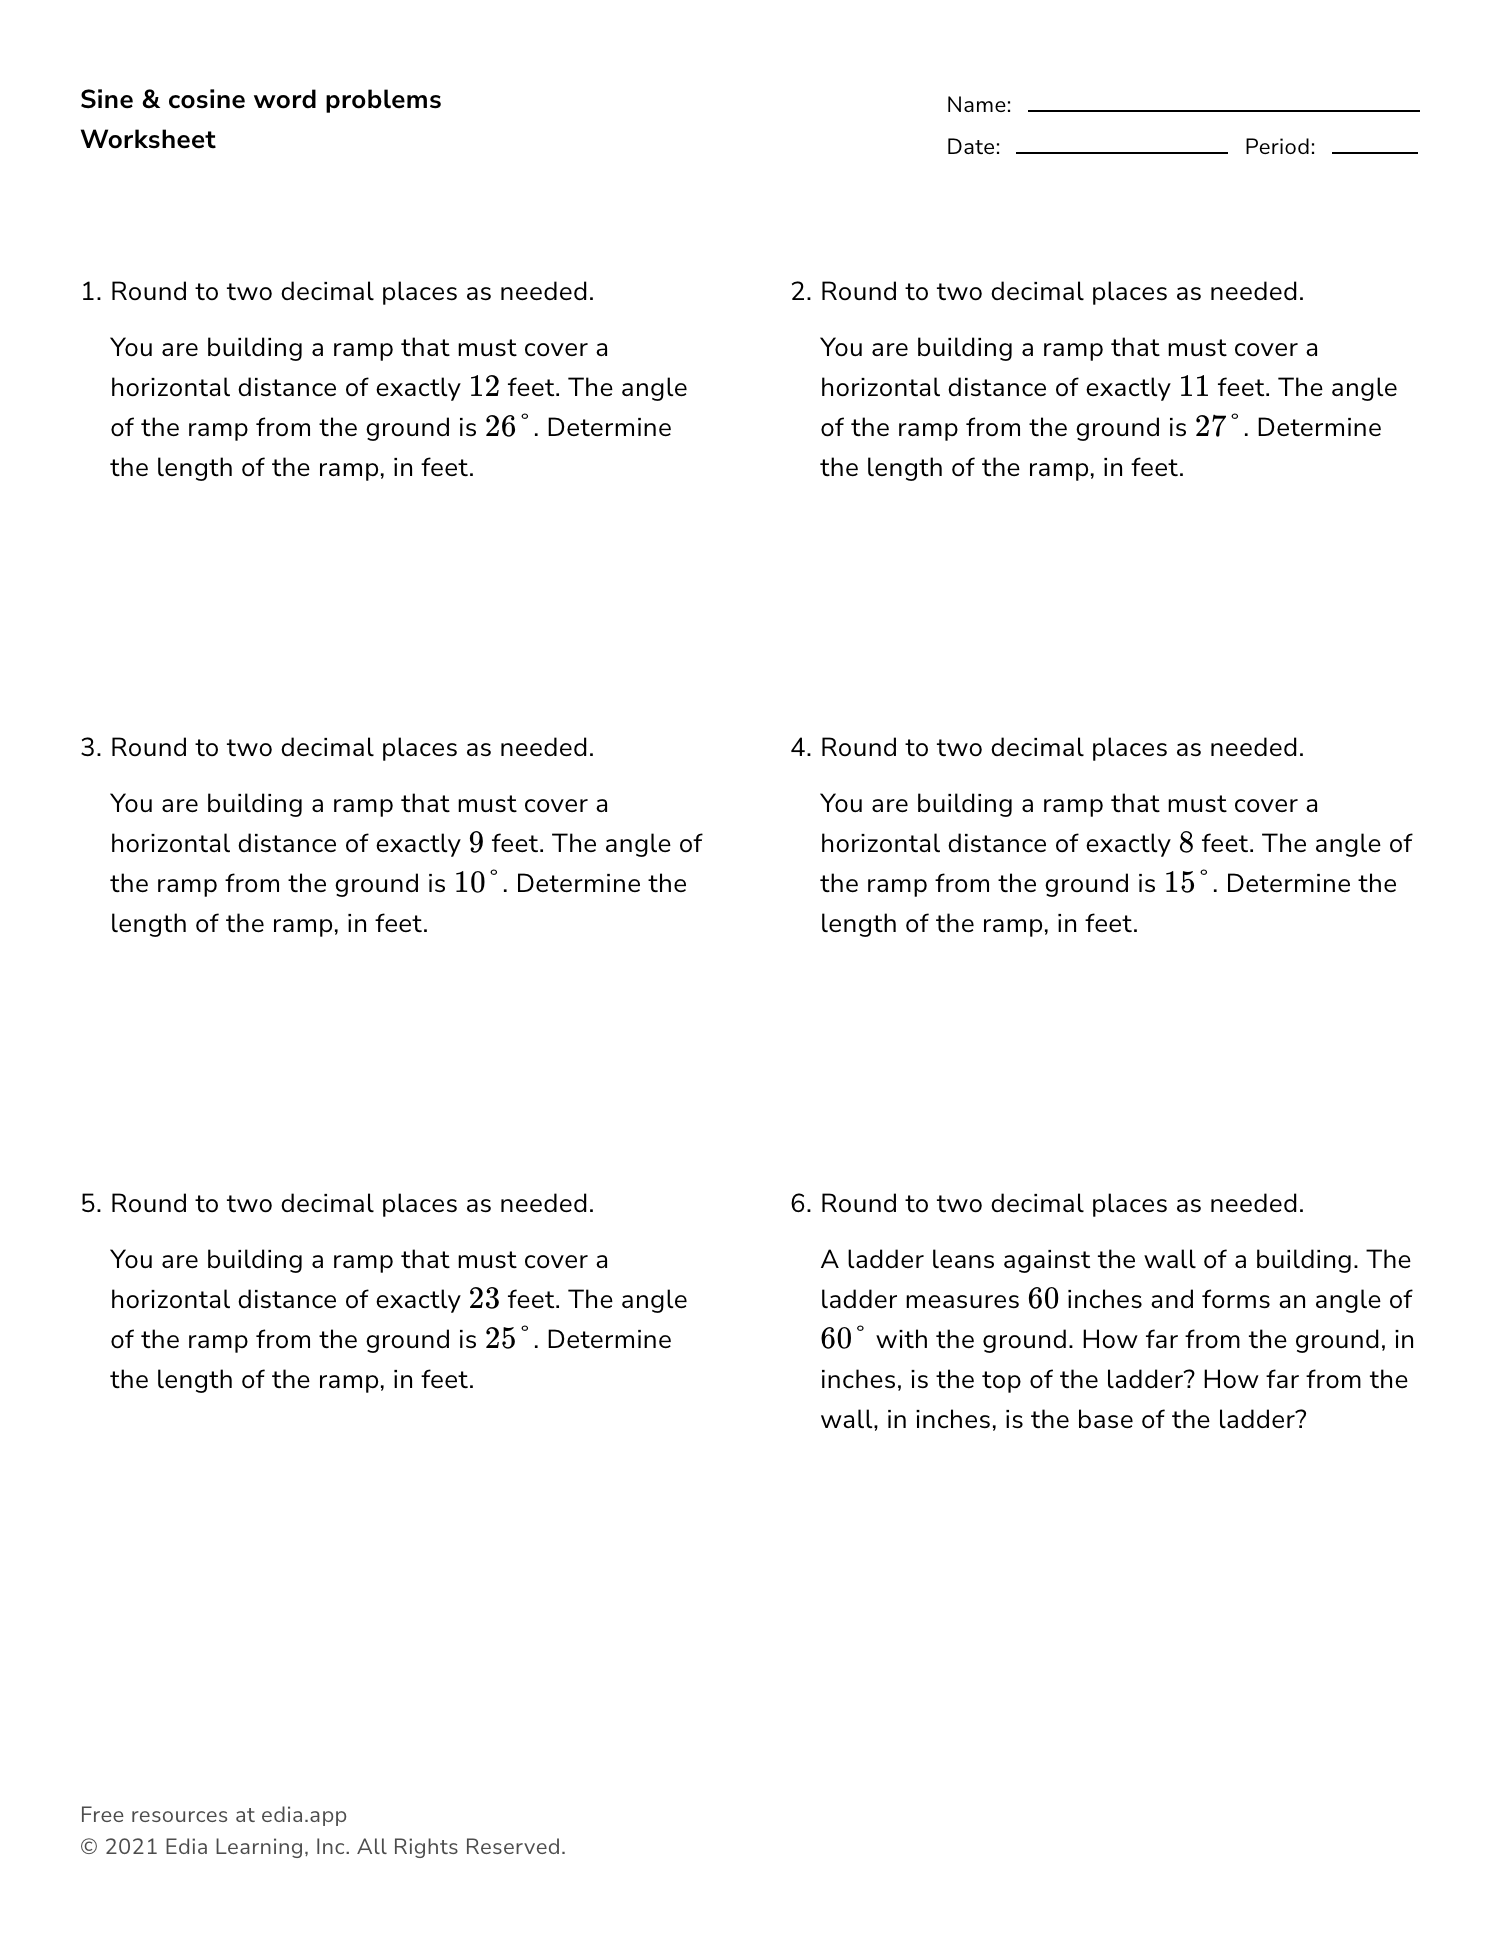 Sine & Cosine Word Problems - Worksheet Pertaining To Right Triangle Word Problems Worksheet